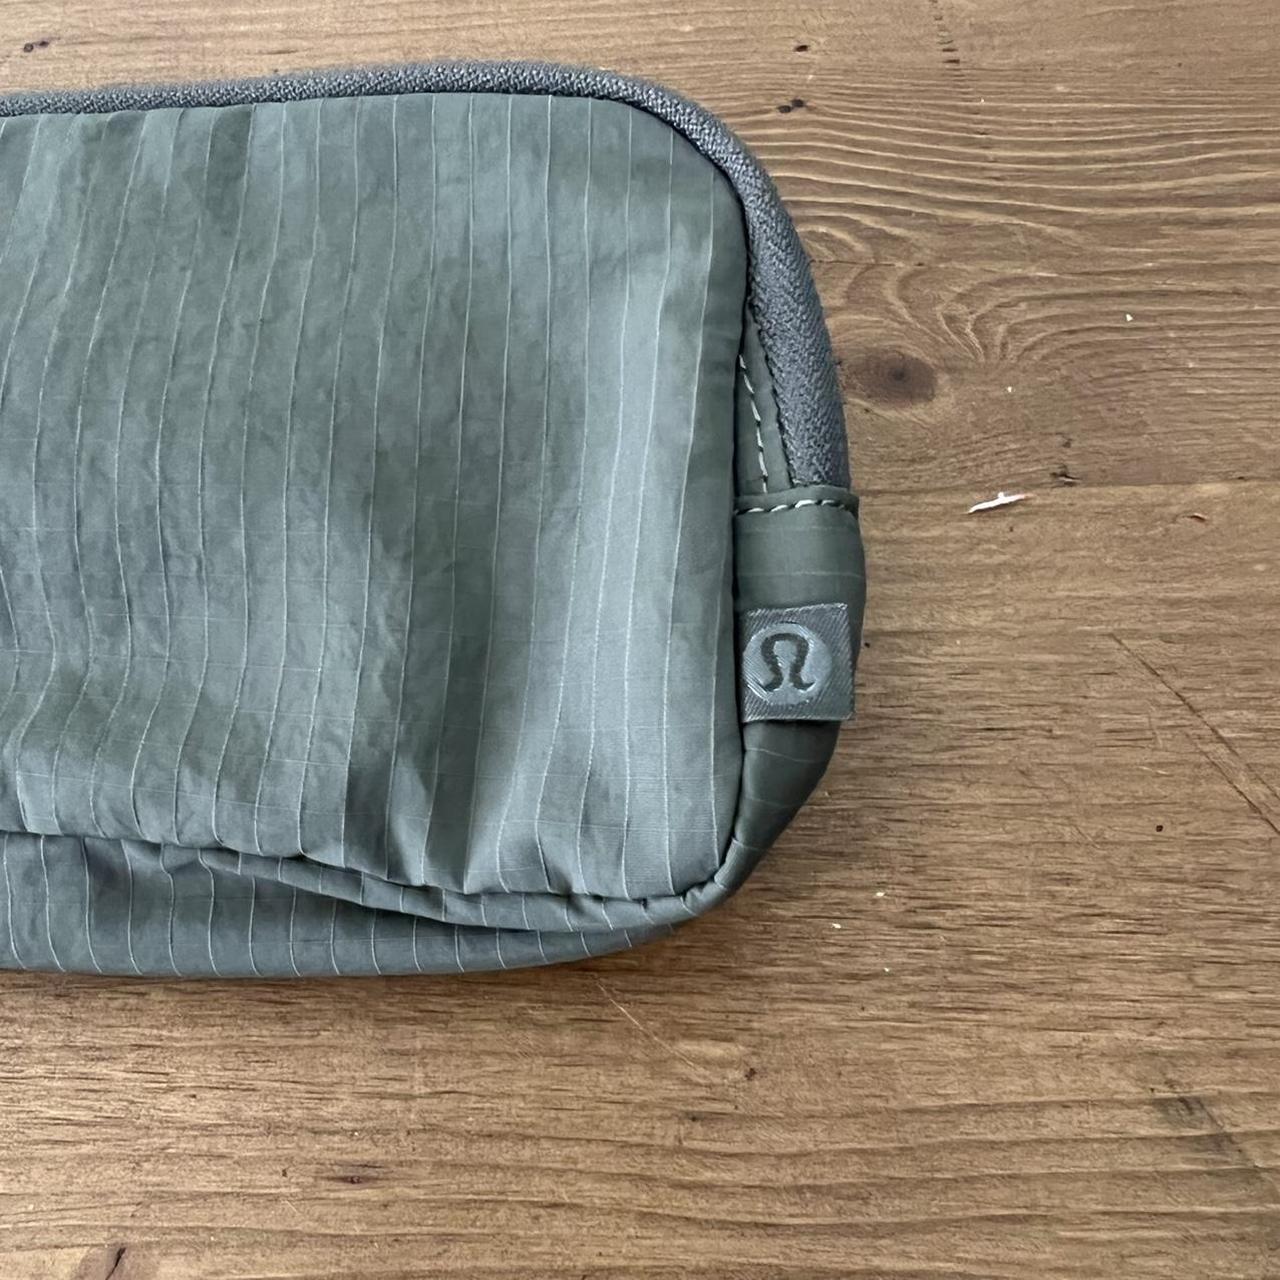 LULULEMON - Everywhere Belt Bag - Nylon in SAGE GREEN color